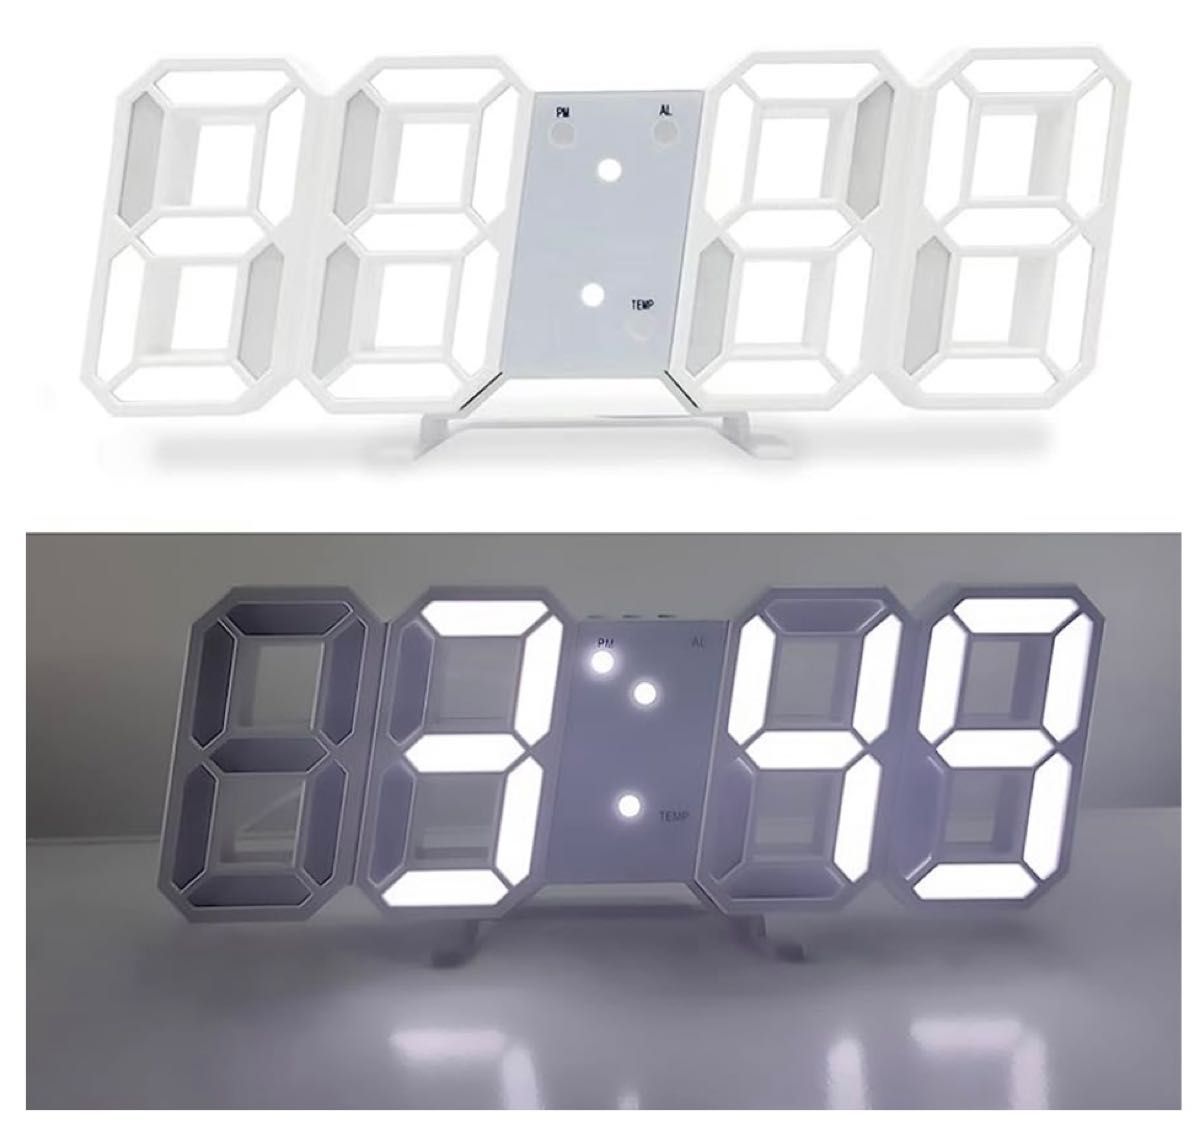 LEDデジタル時計 3Dデザイン アラーム機能付き 置き時計 壁掛け時計 明るさ調整 (ホワイト)